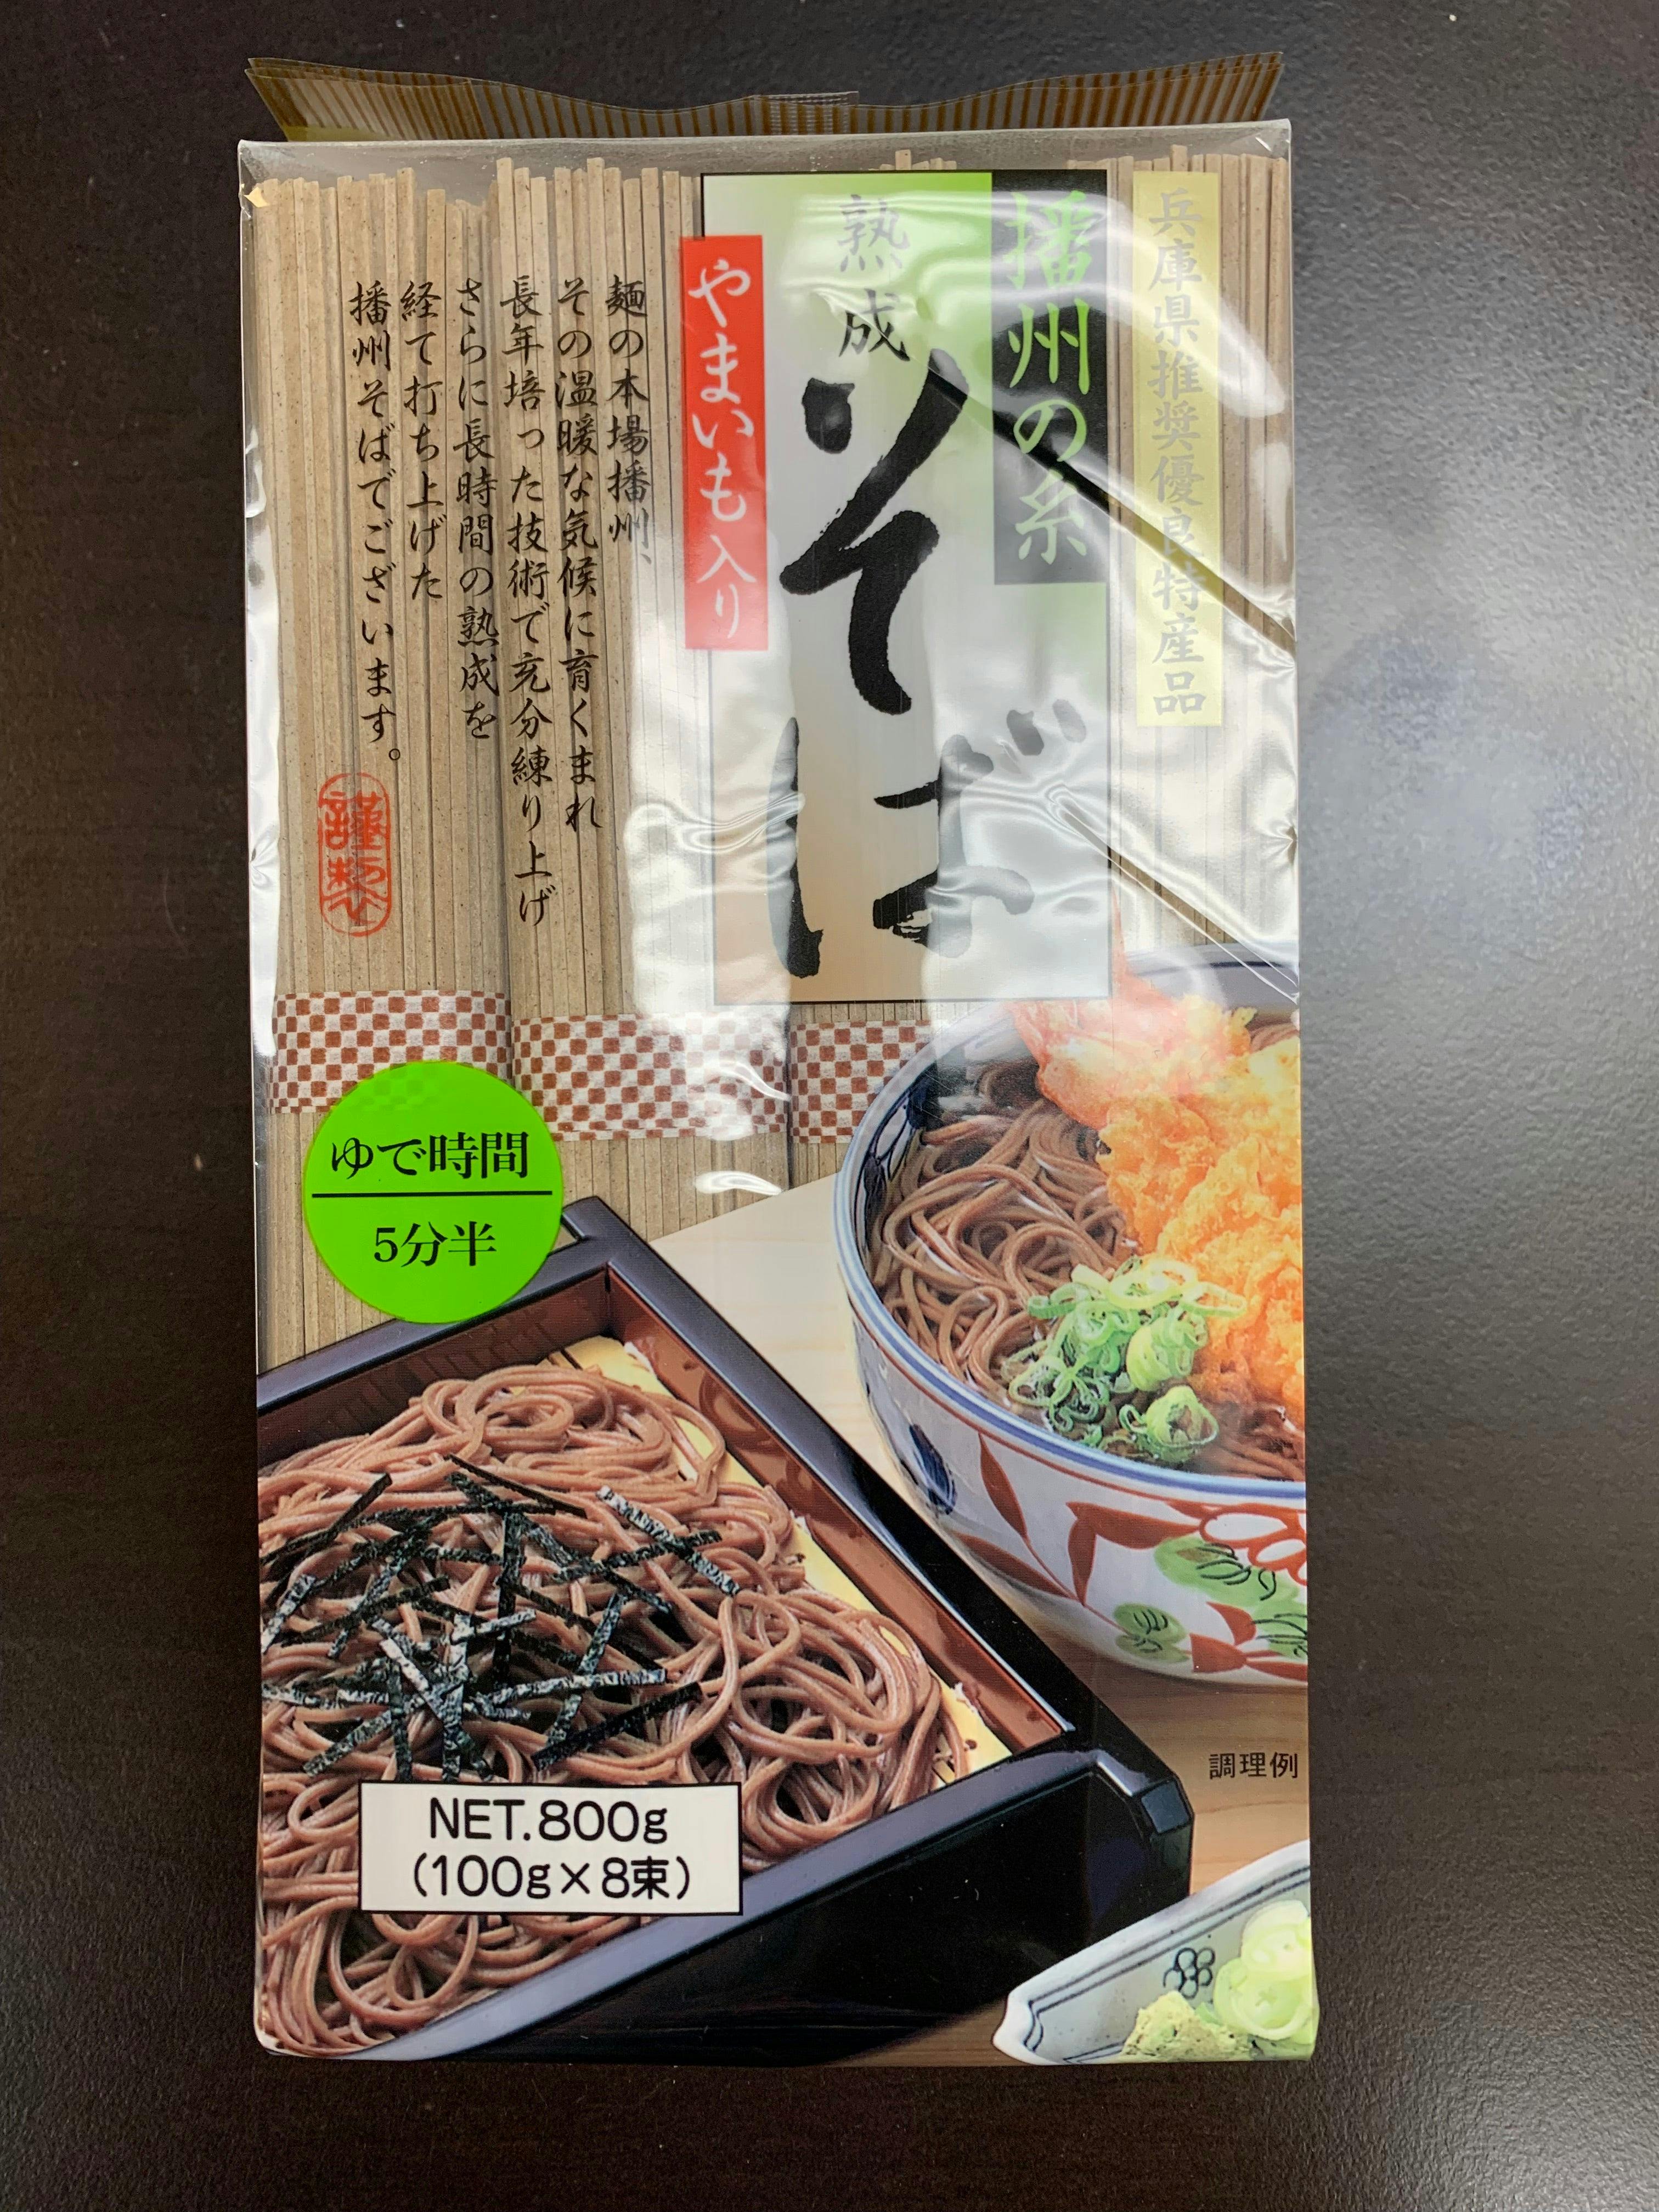 Showa banshu noodle 播州荞麦面